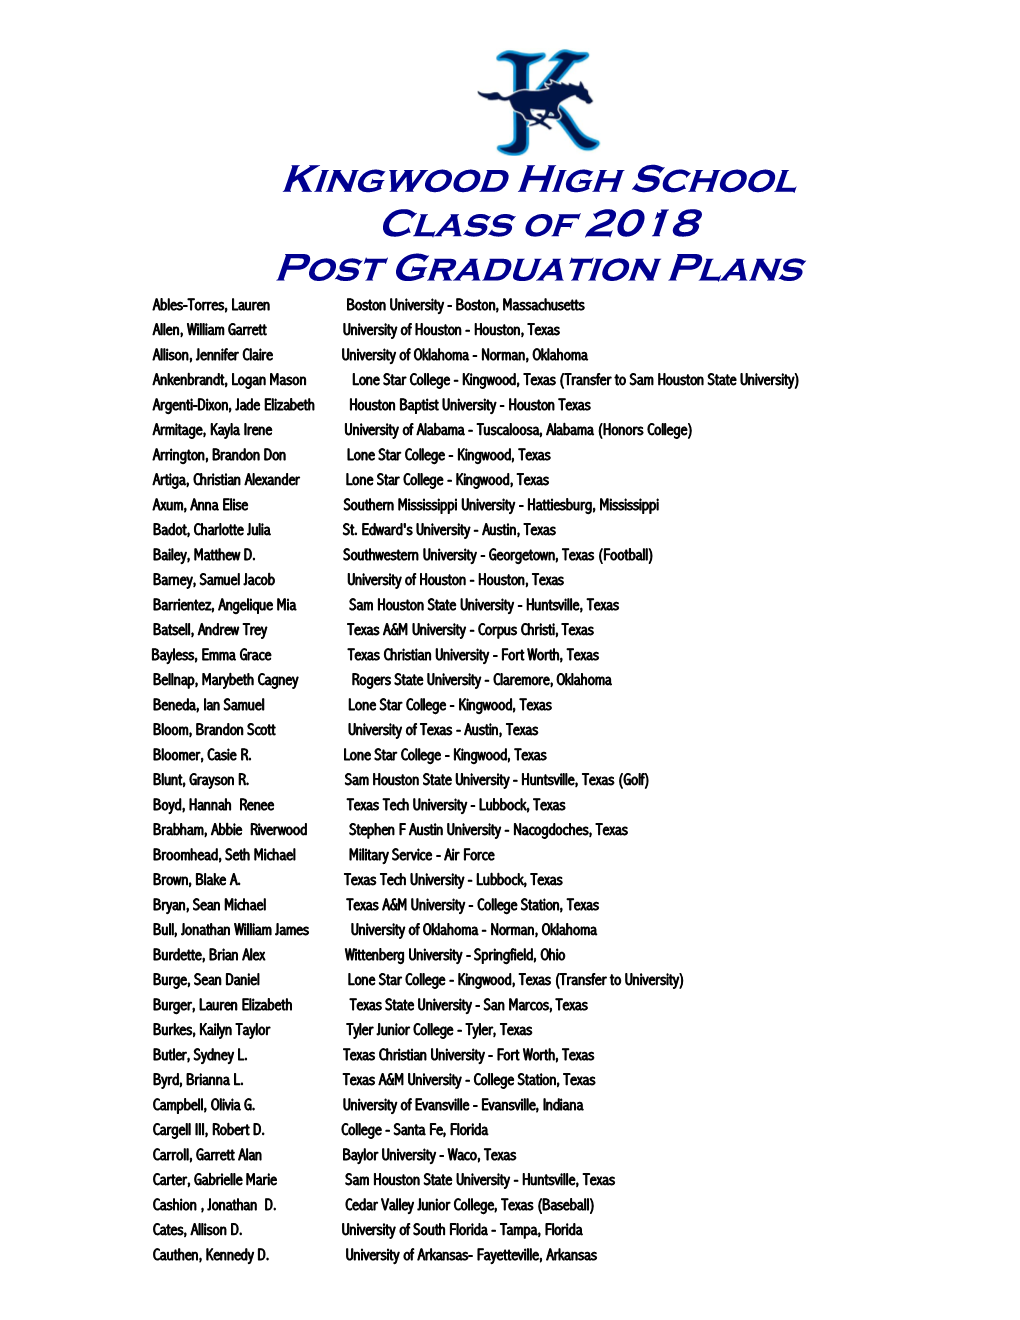 Kingwood High School Class of 2018 Post Graduation Plans